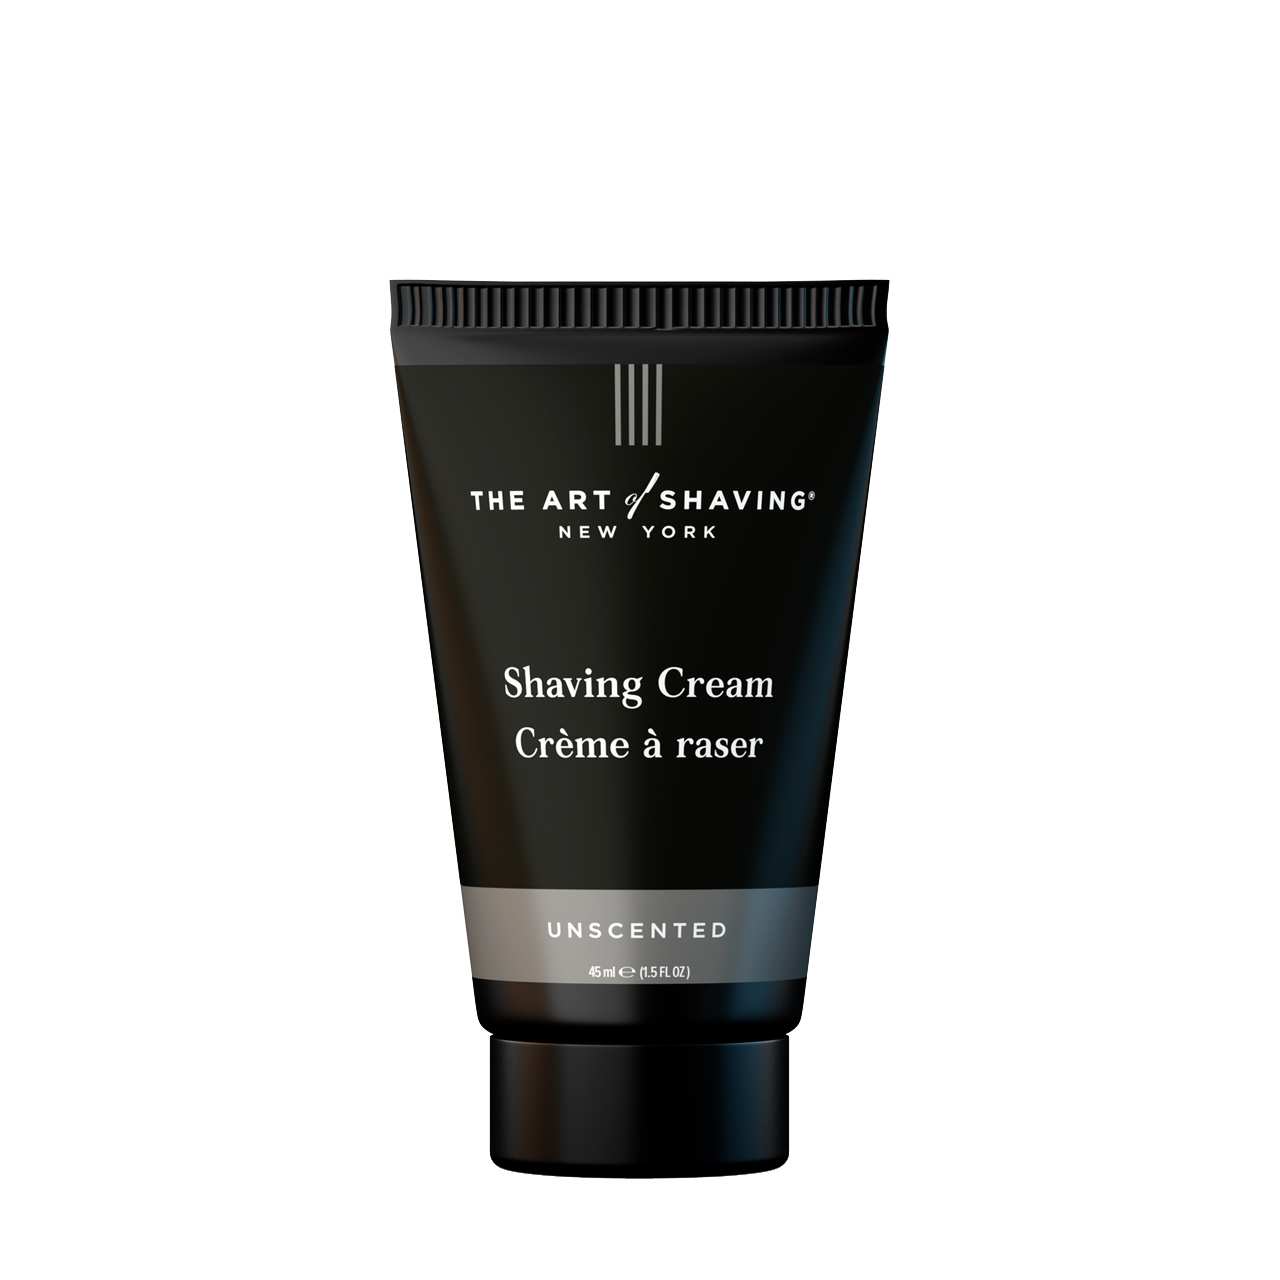 Unscented Shaving Cream 1.5 oz - Image 1